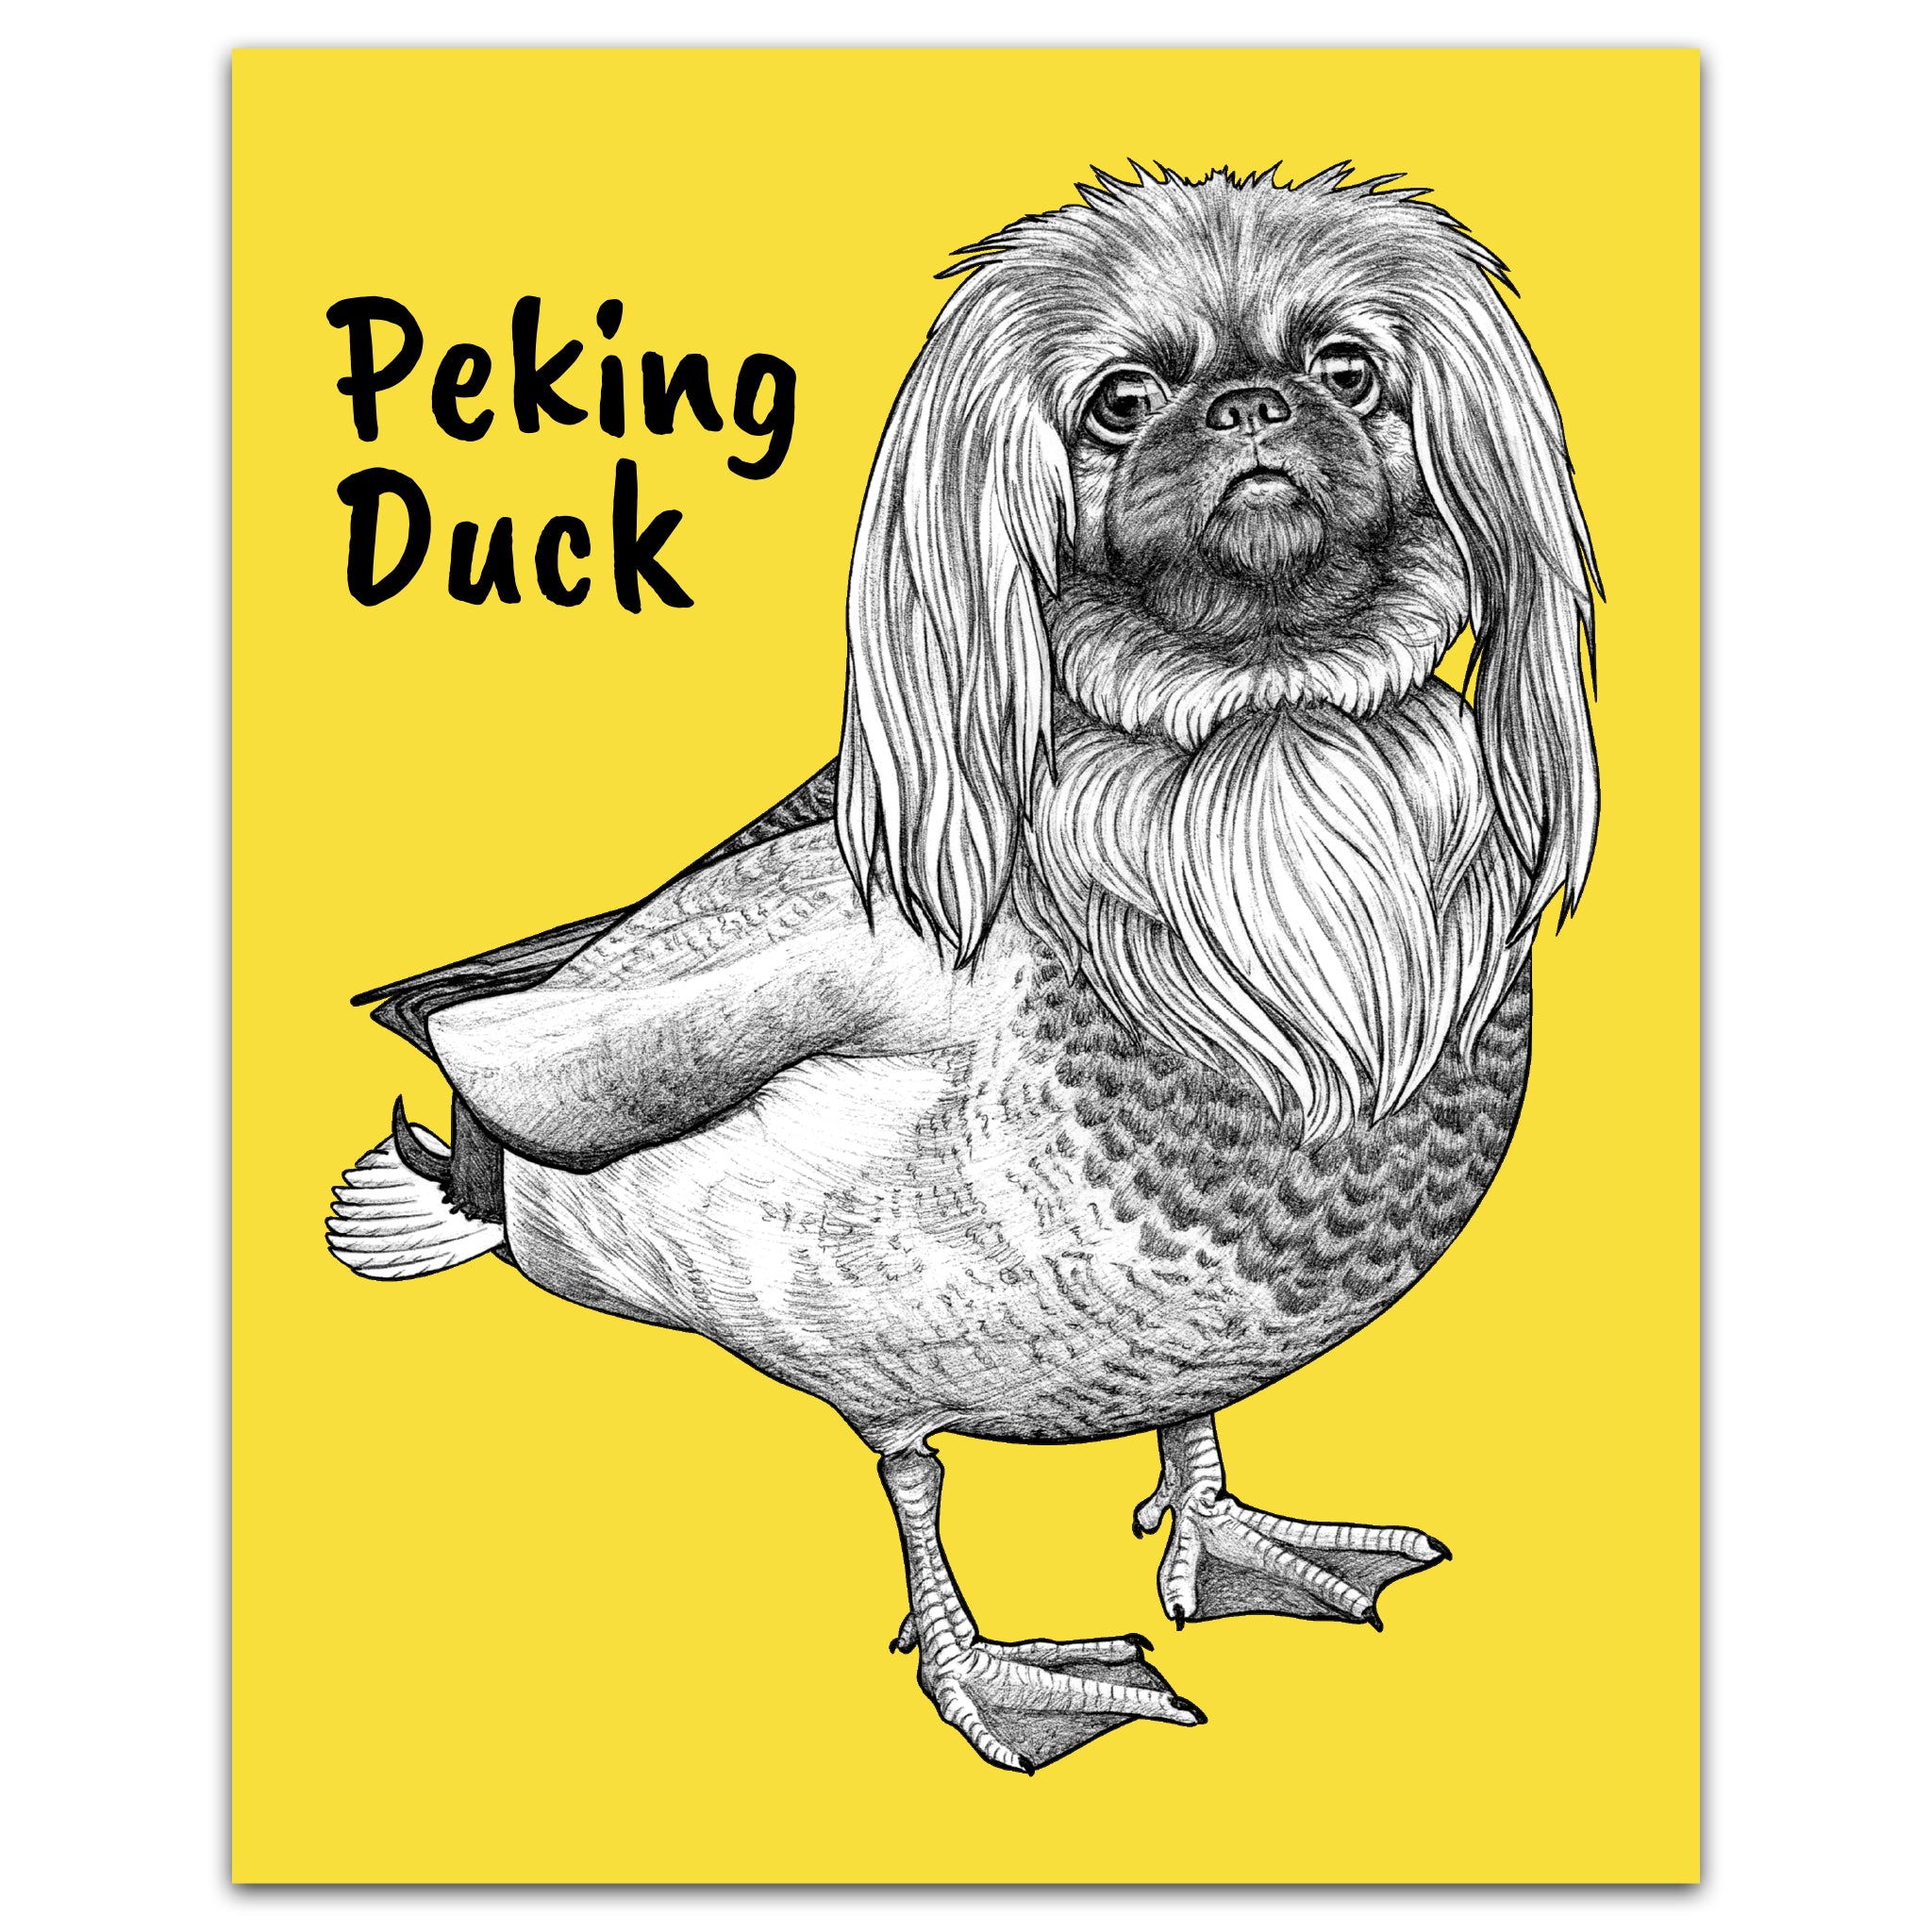 Peking Duck | Pekingese + Duck Hybrid Animal | 8x10" Color Print